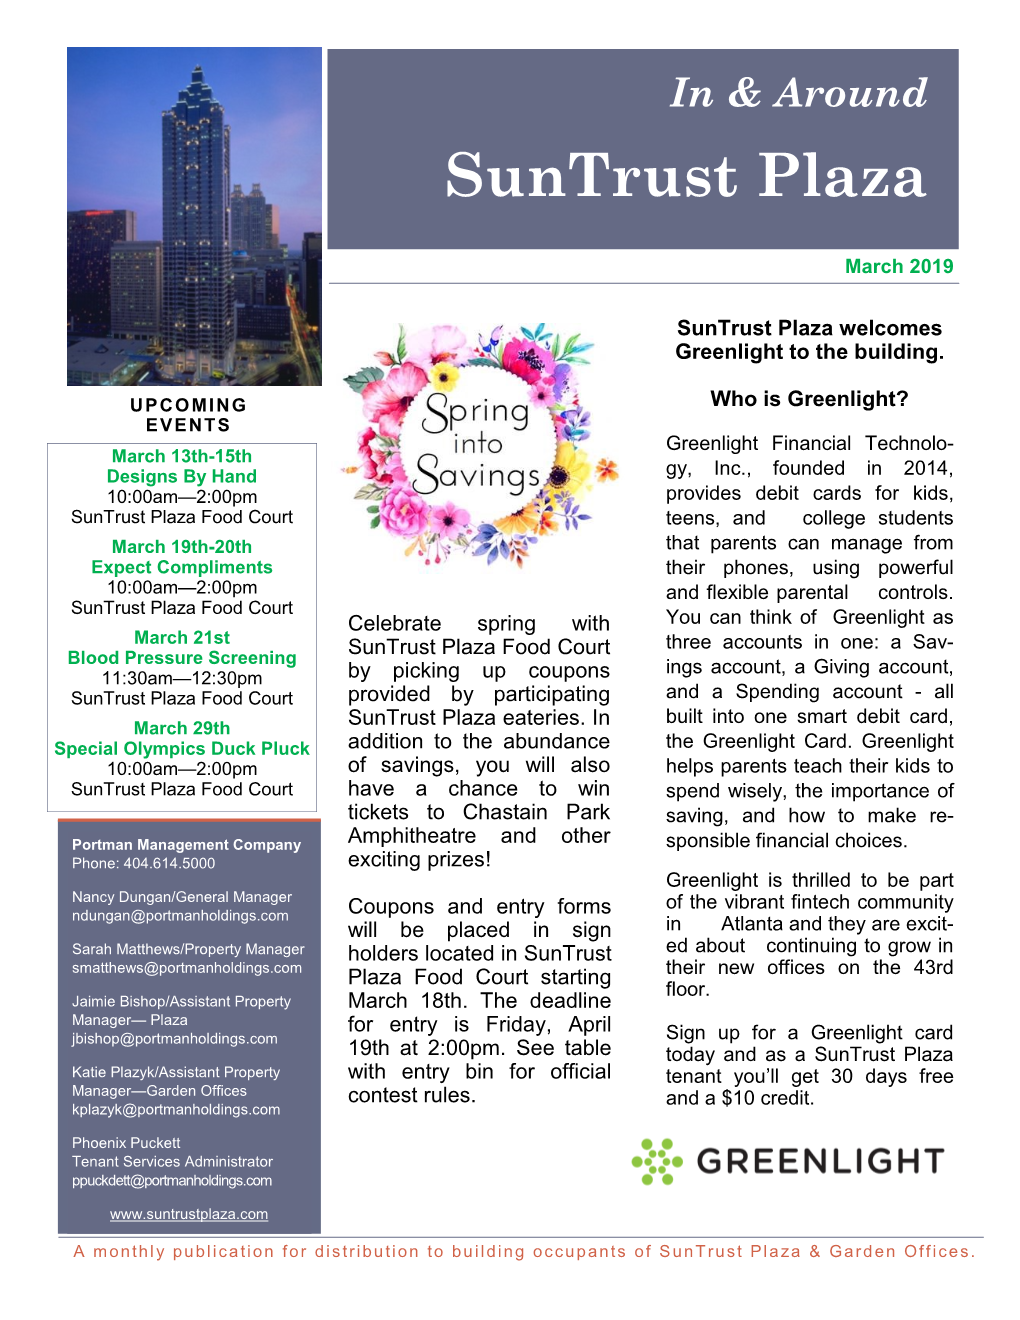 In & Around Suntrust Plaza